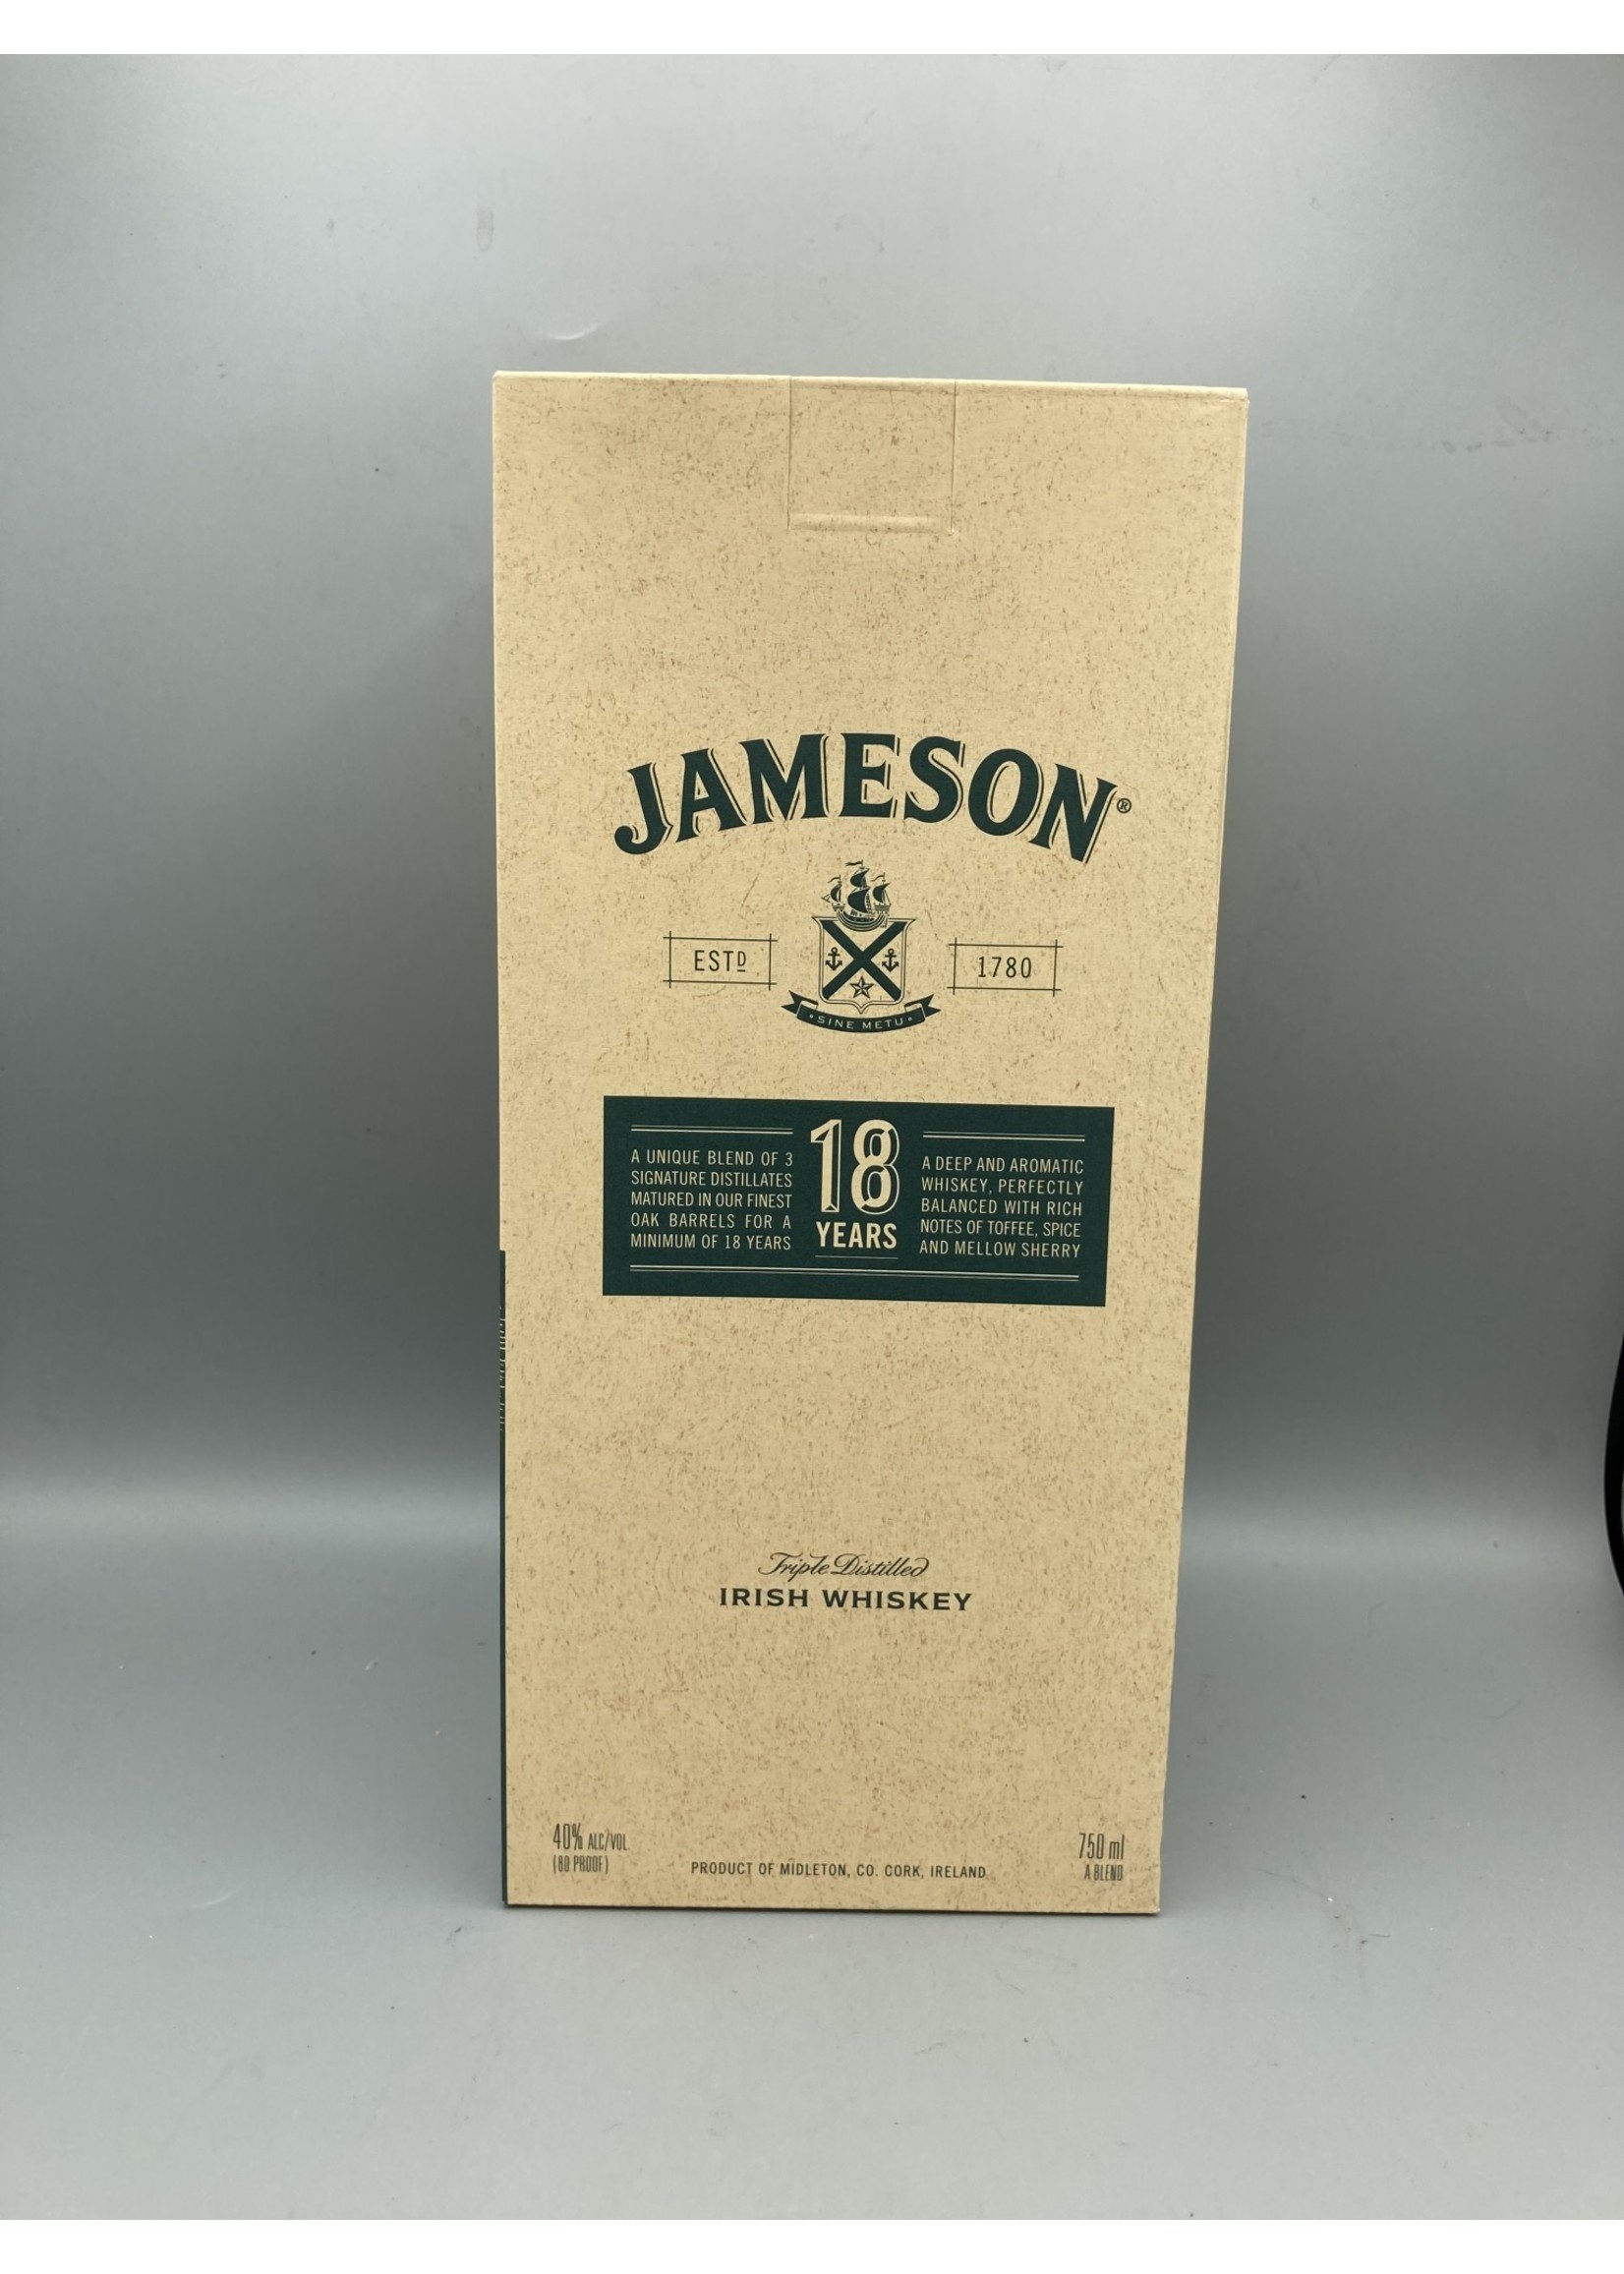 Jameson Original Irish Whiskey, 750 mL Bottle, 40% ABV 